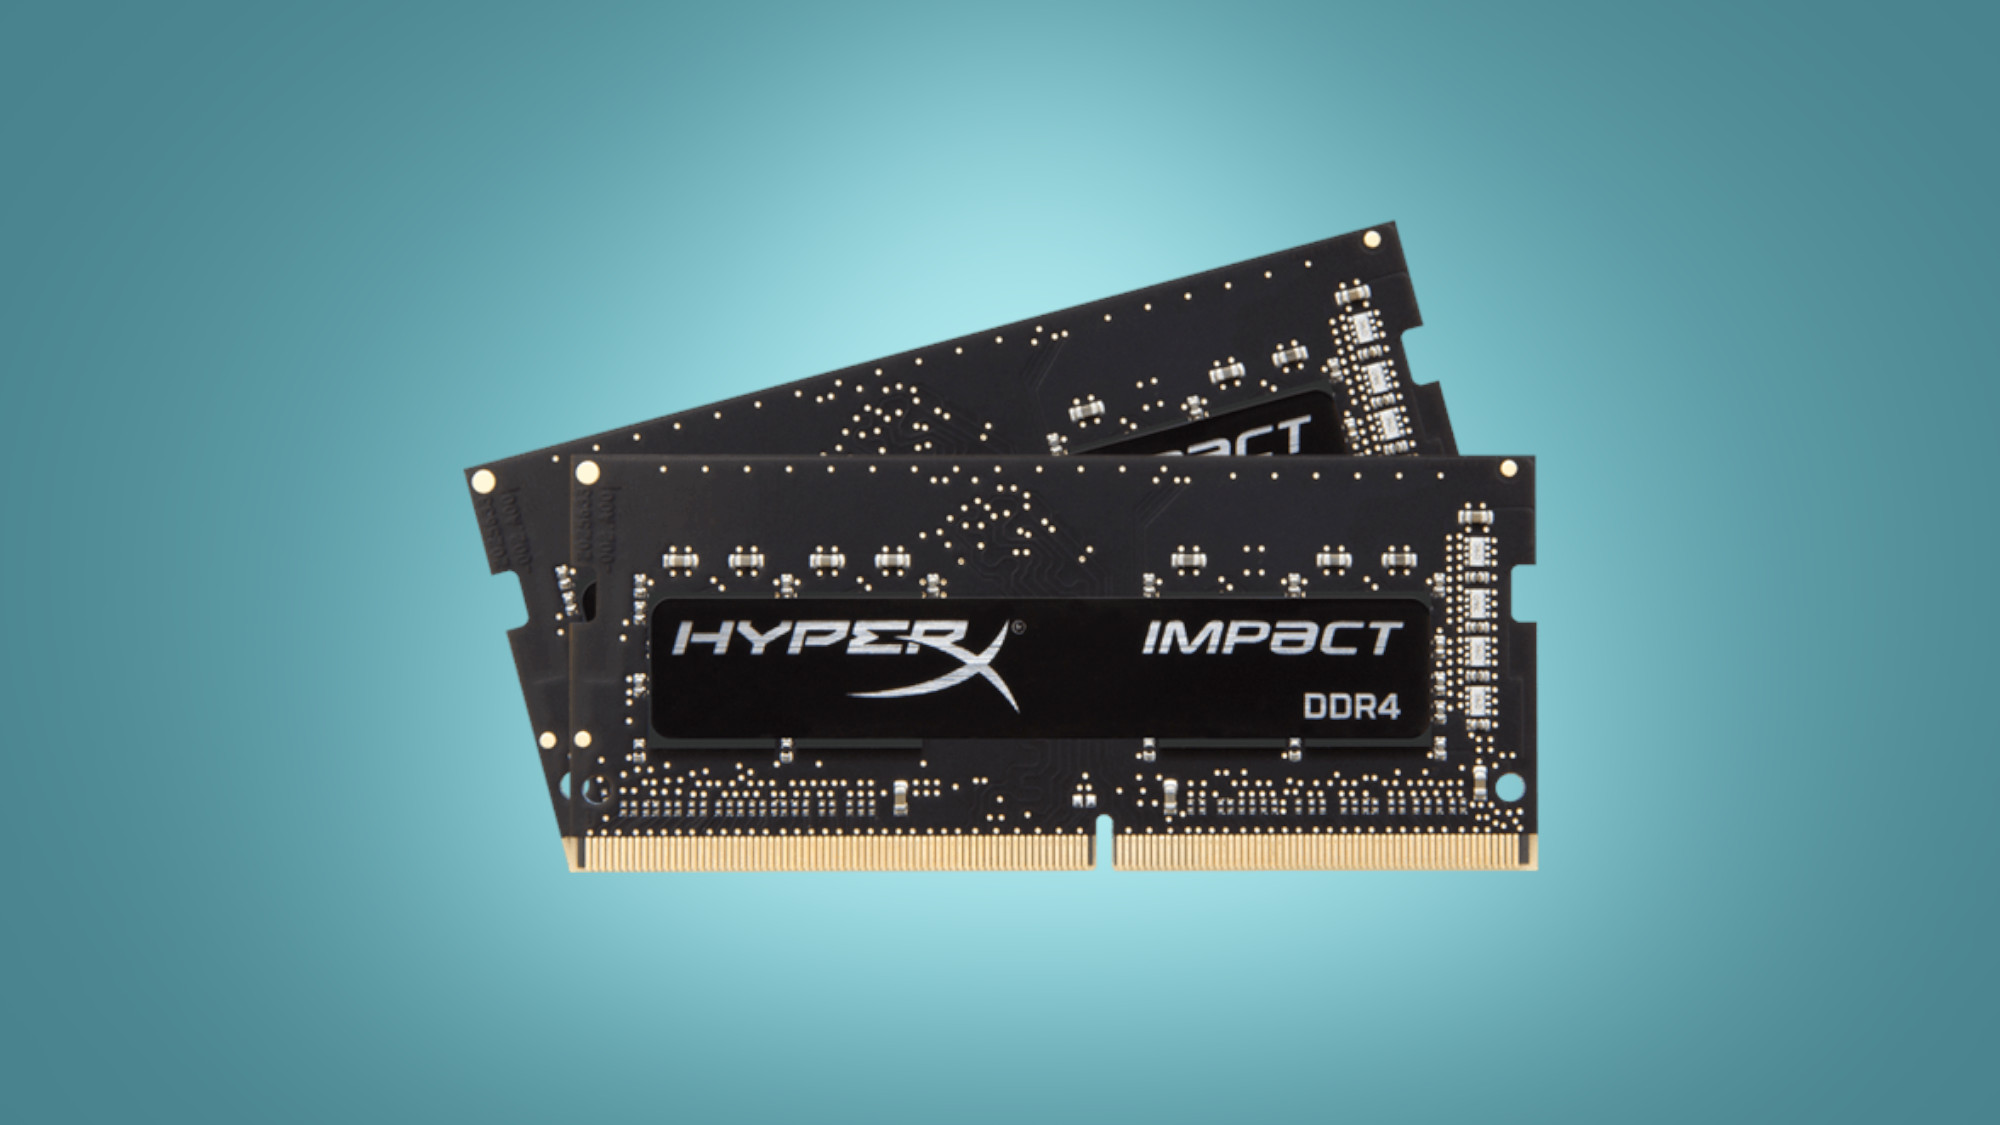 HyperX Impact DDR4 RAM on a light blue background